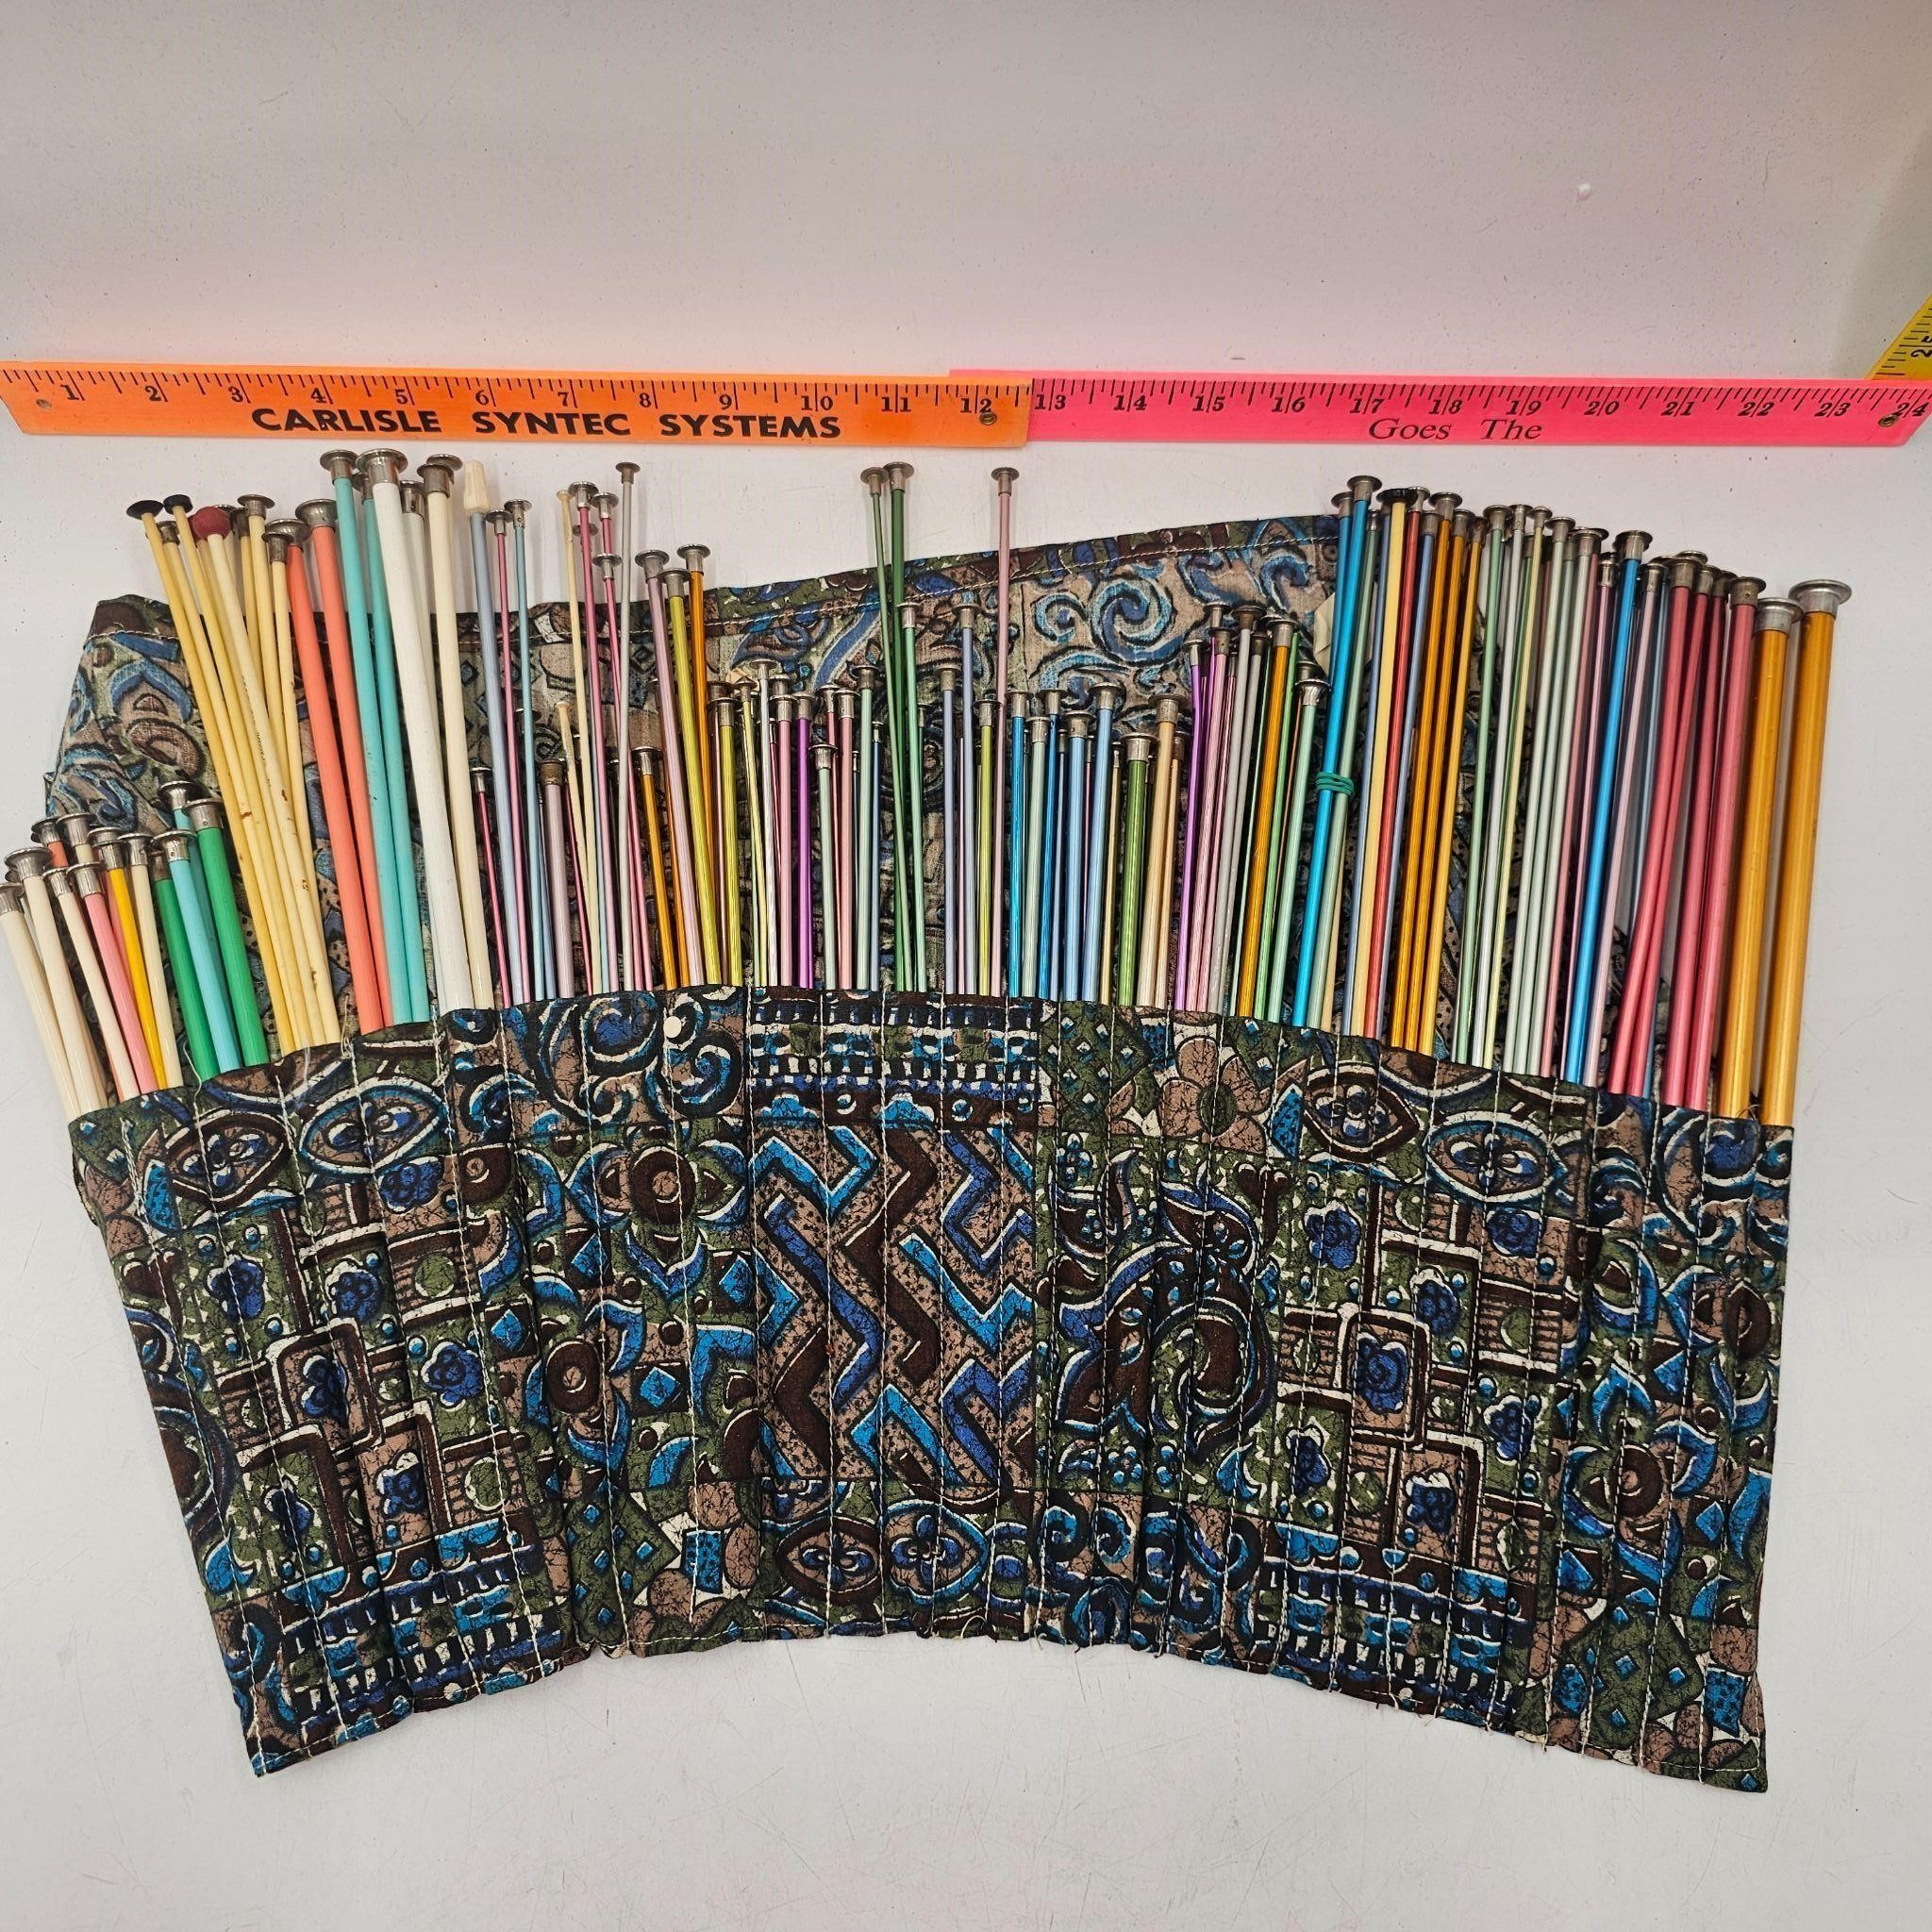 Vintage Crochet Needles